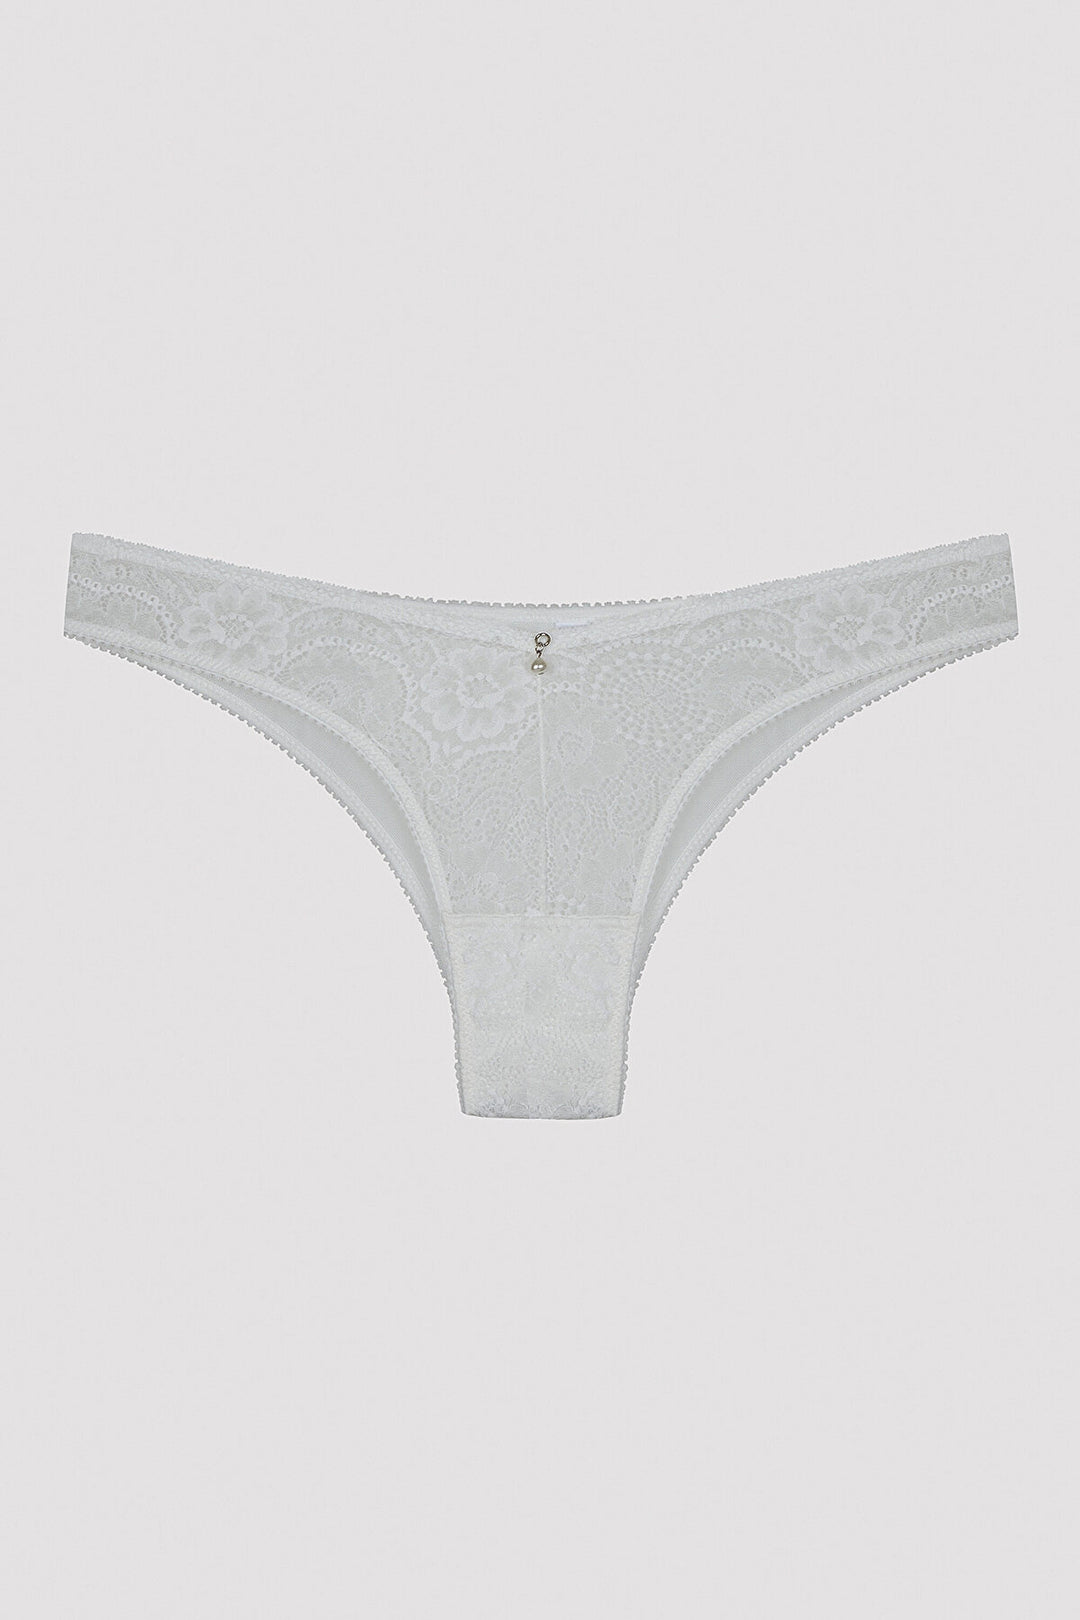 V Cut White Brazilian Panties